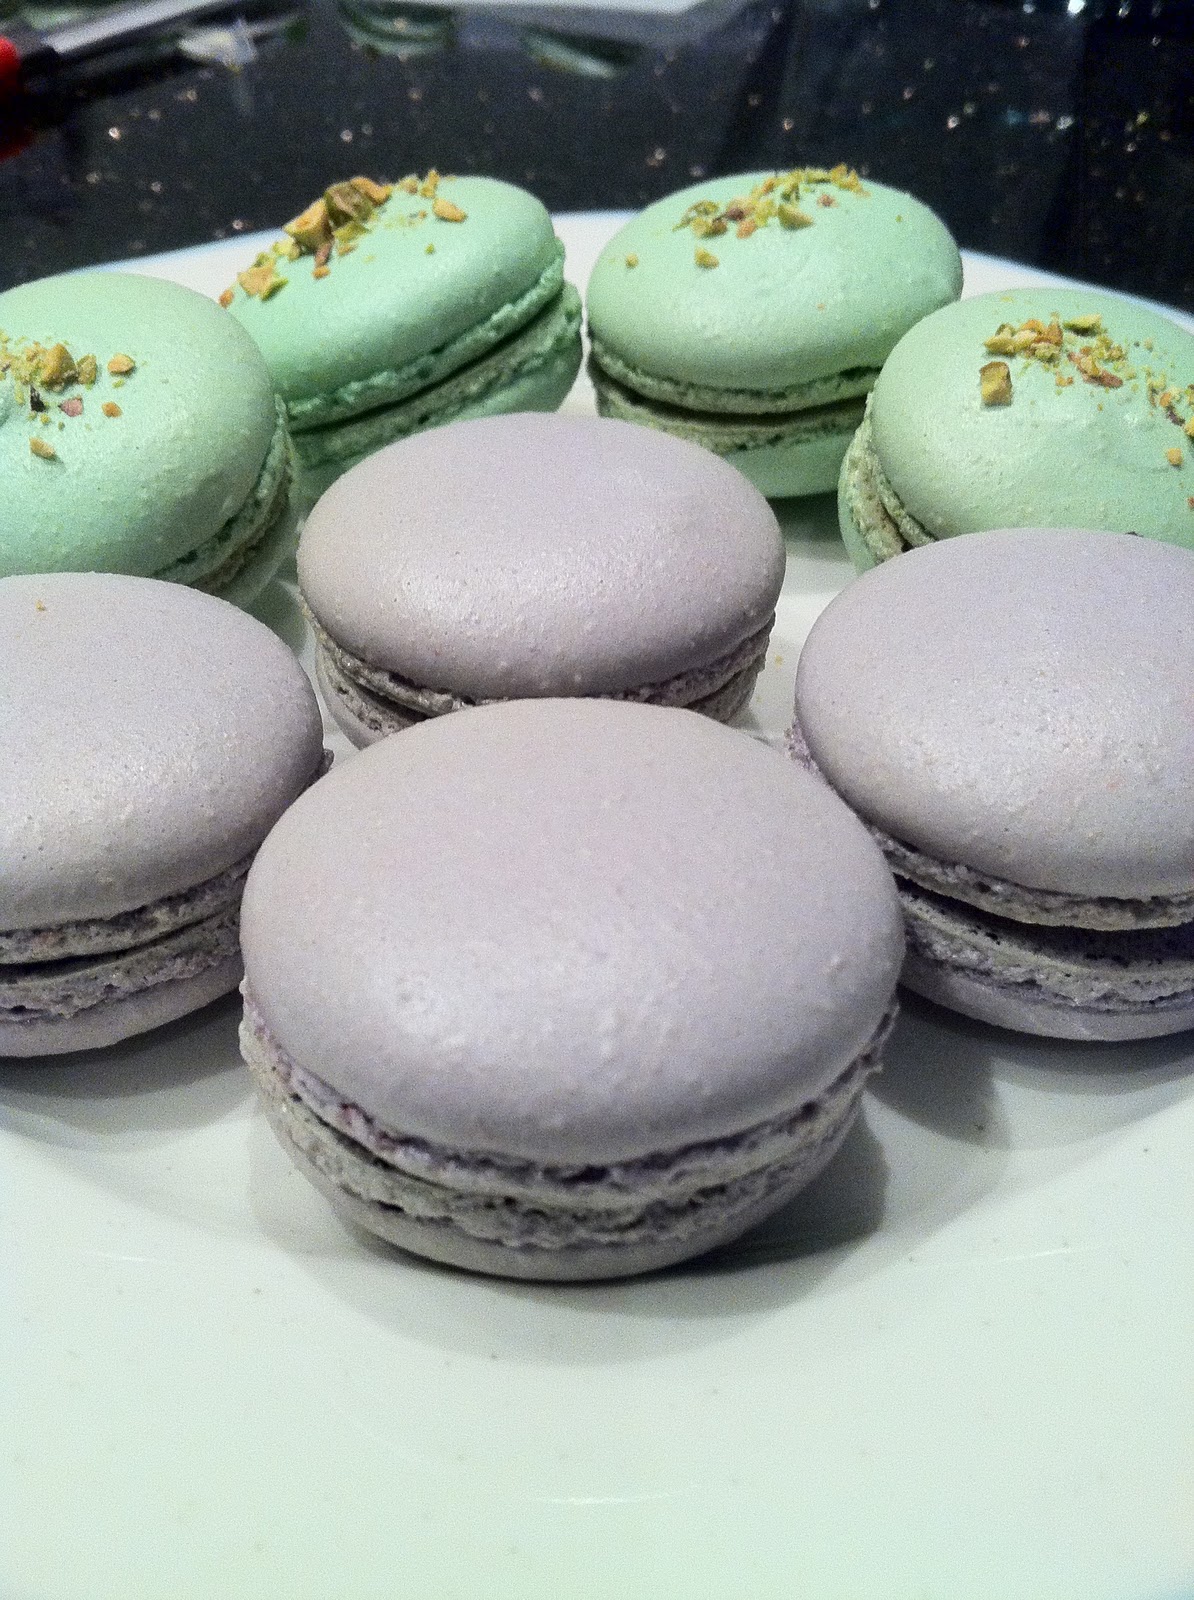 Team JJ's Bakery: Pistachio macarons & Lavender macarons